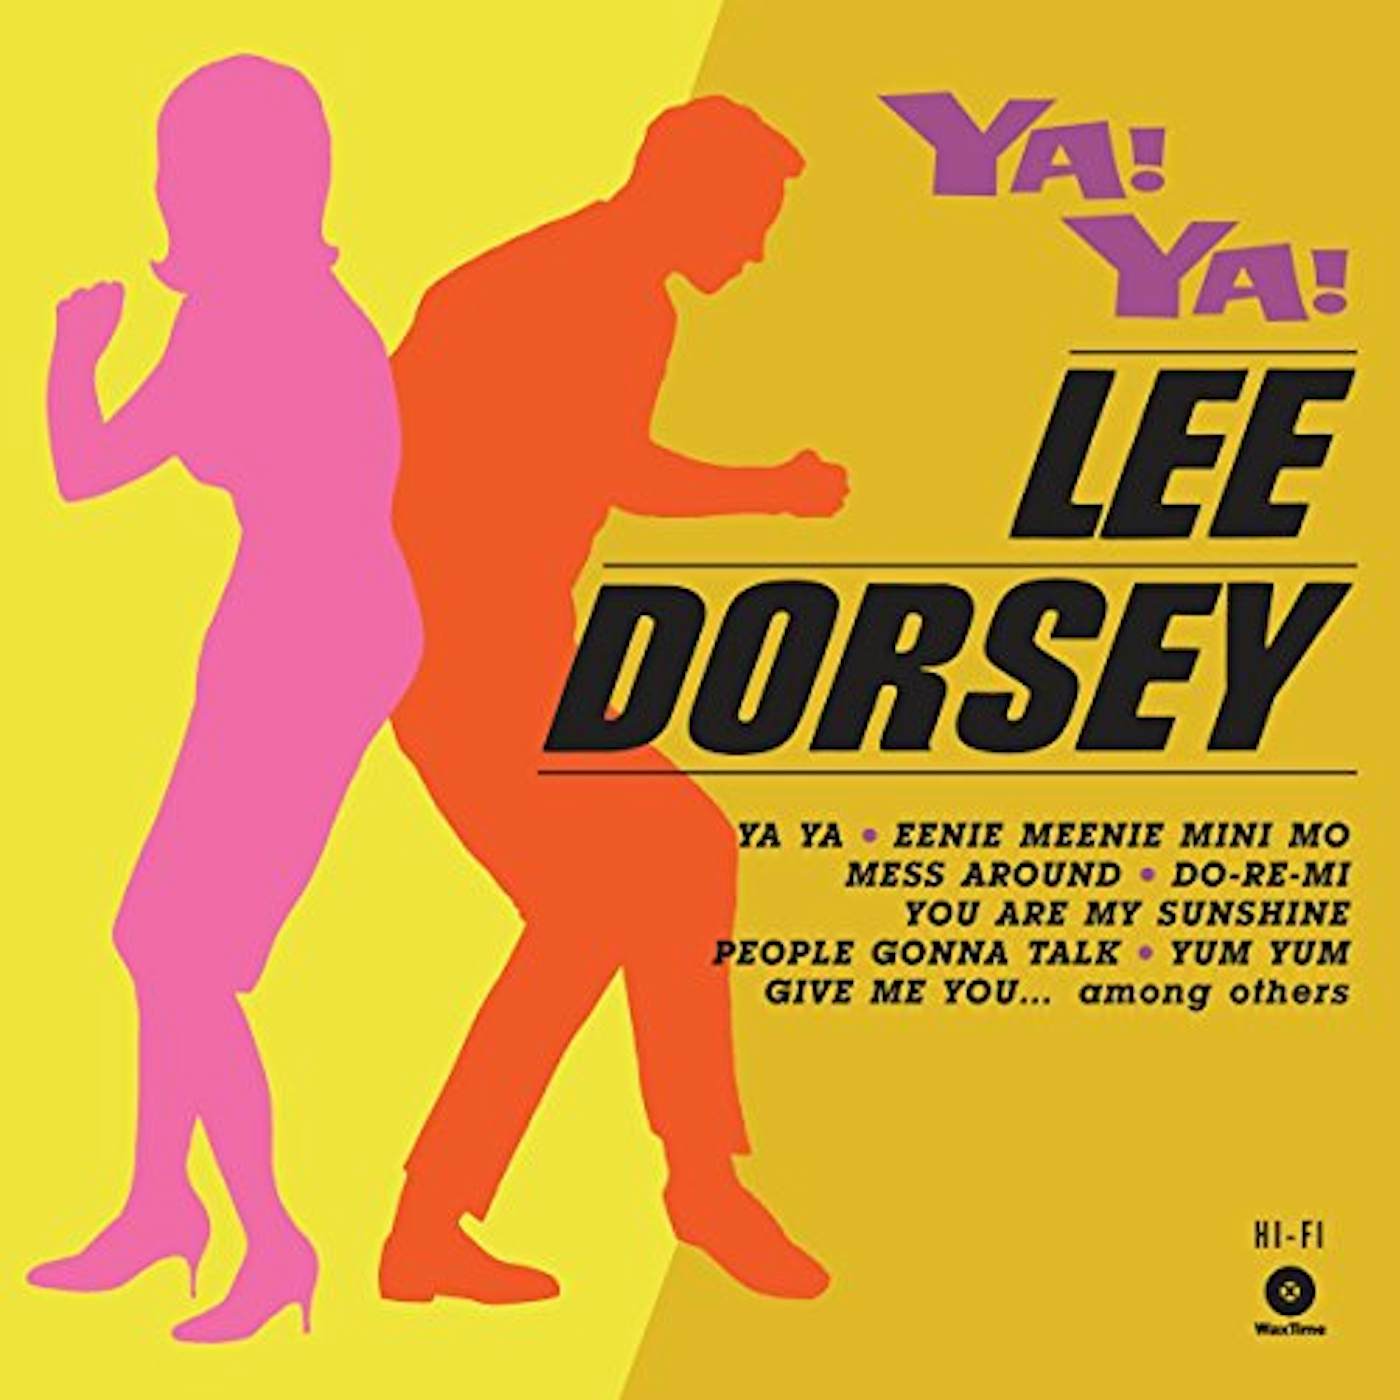 Lee Dorsey YA! YA! + 3 BONUS TRACKS (BONUS TRACKS) Vinyl Record - Limited Edition